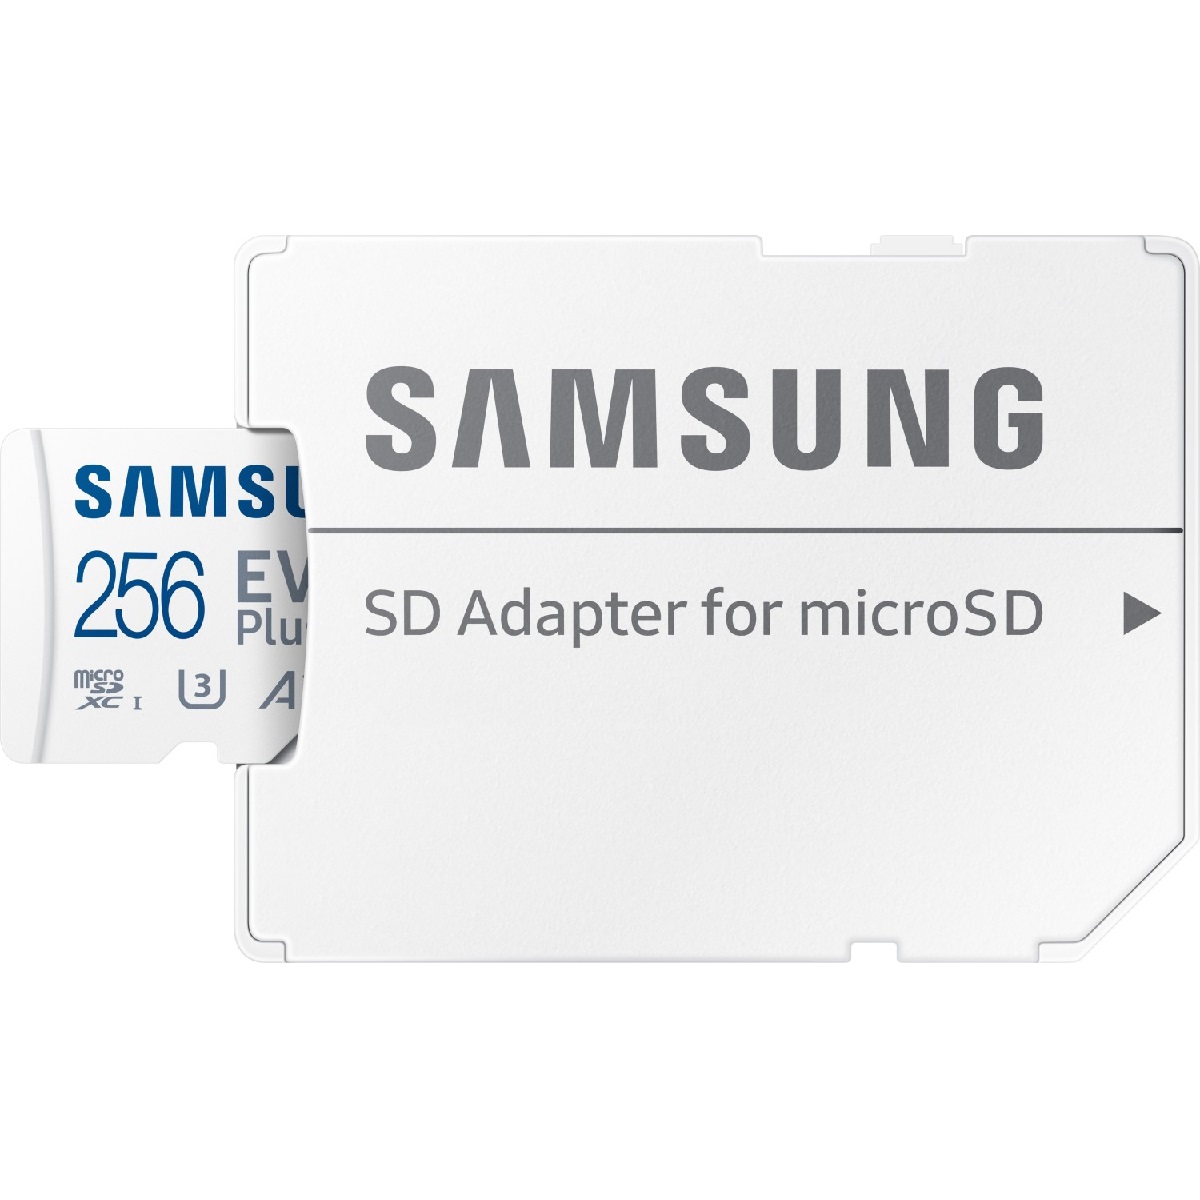 Samsung Evo Plus (2021) microSD Card 256GB